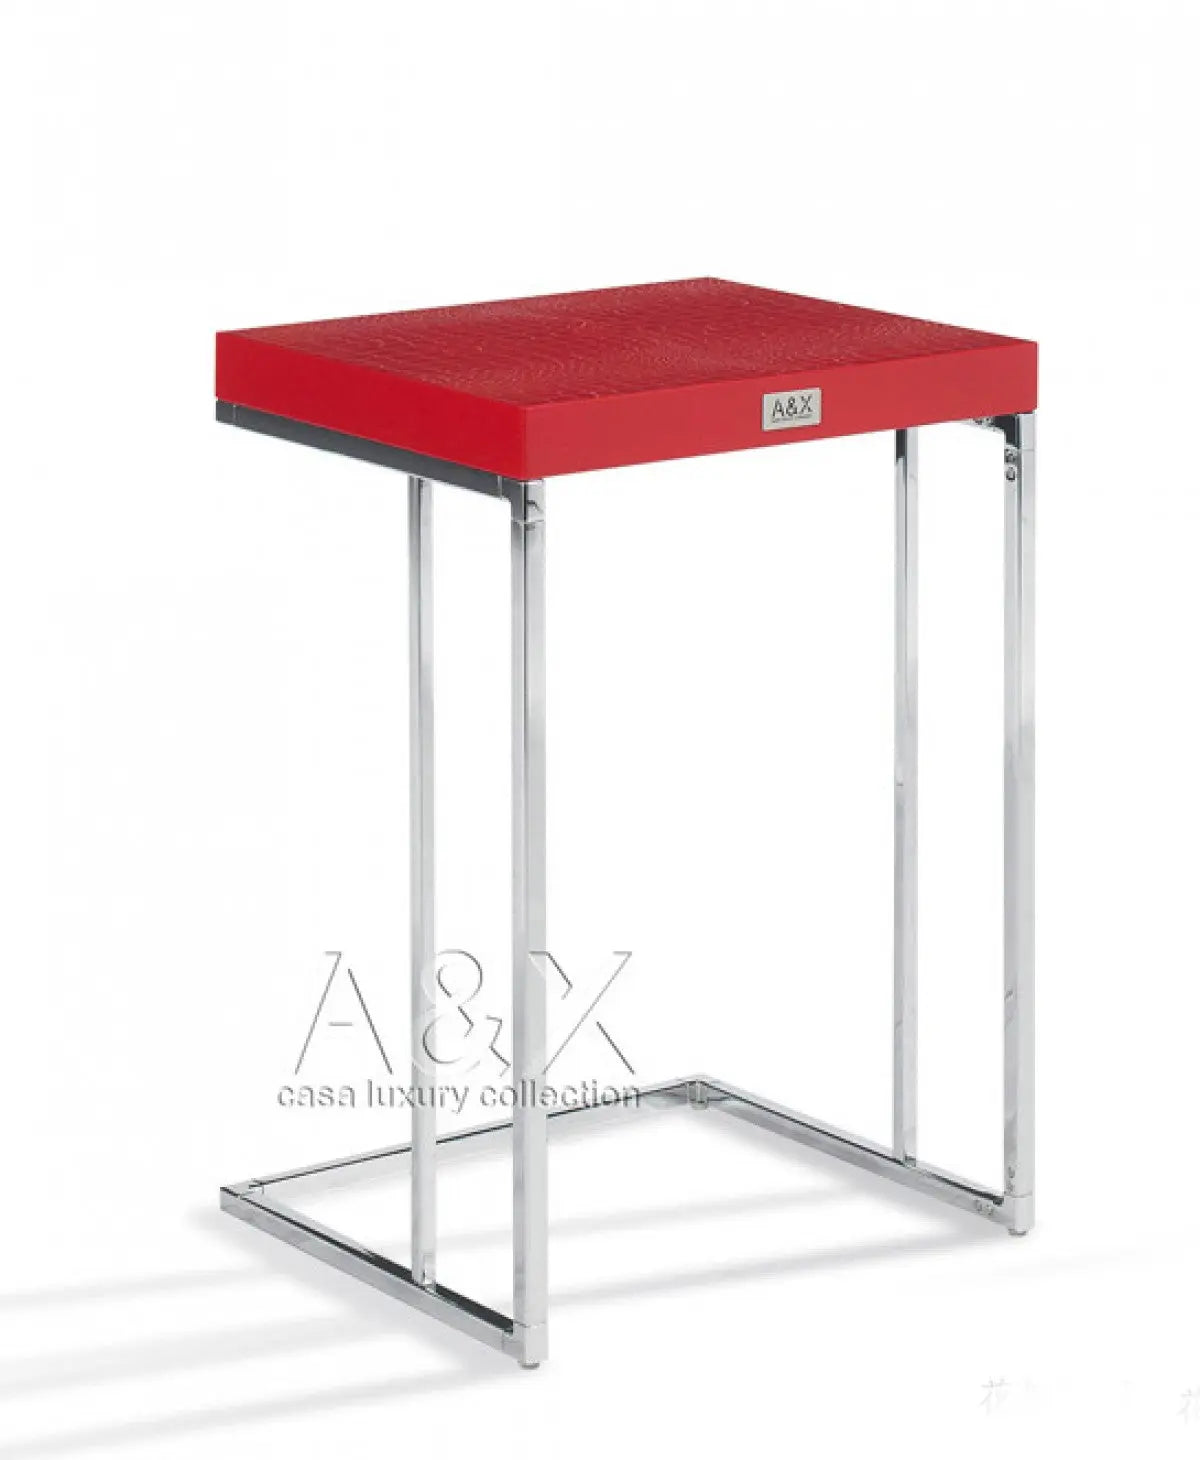 Vig Furniture - A&X Amelia - Modern Red Crocodile Lacquer Nesting Table Set - Vgunak855-Red